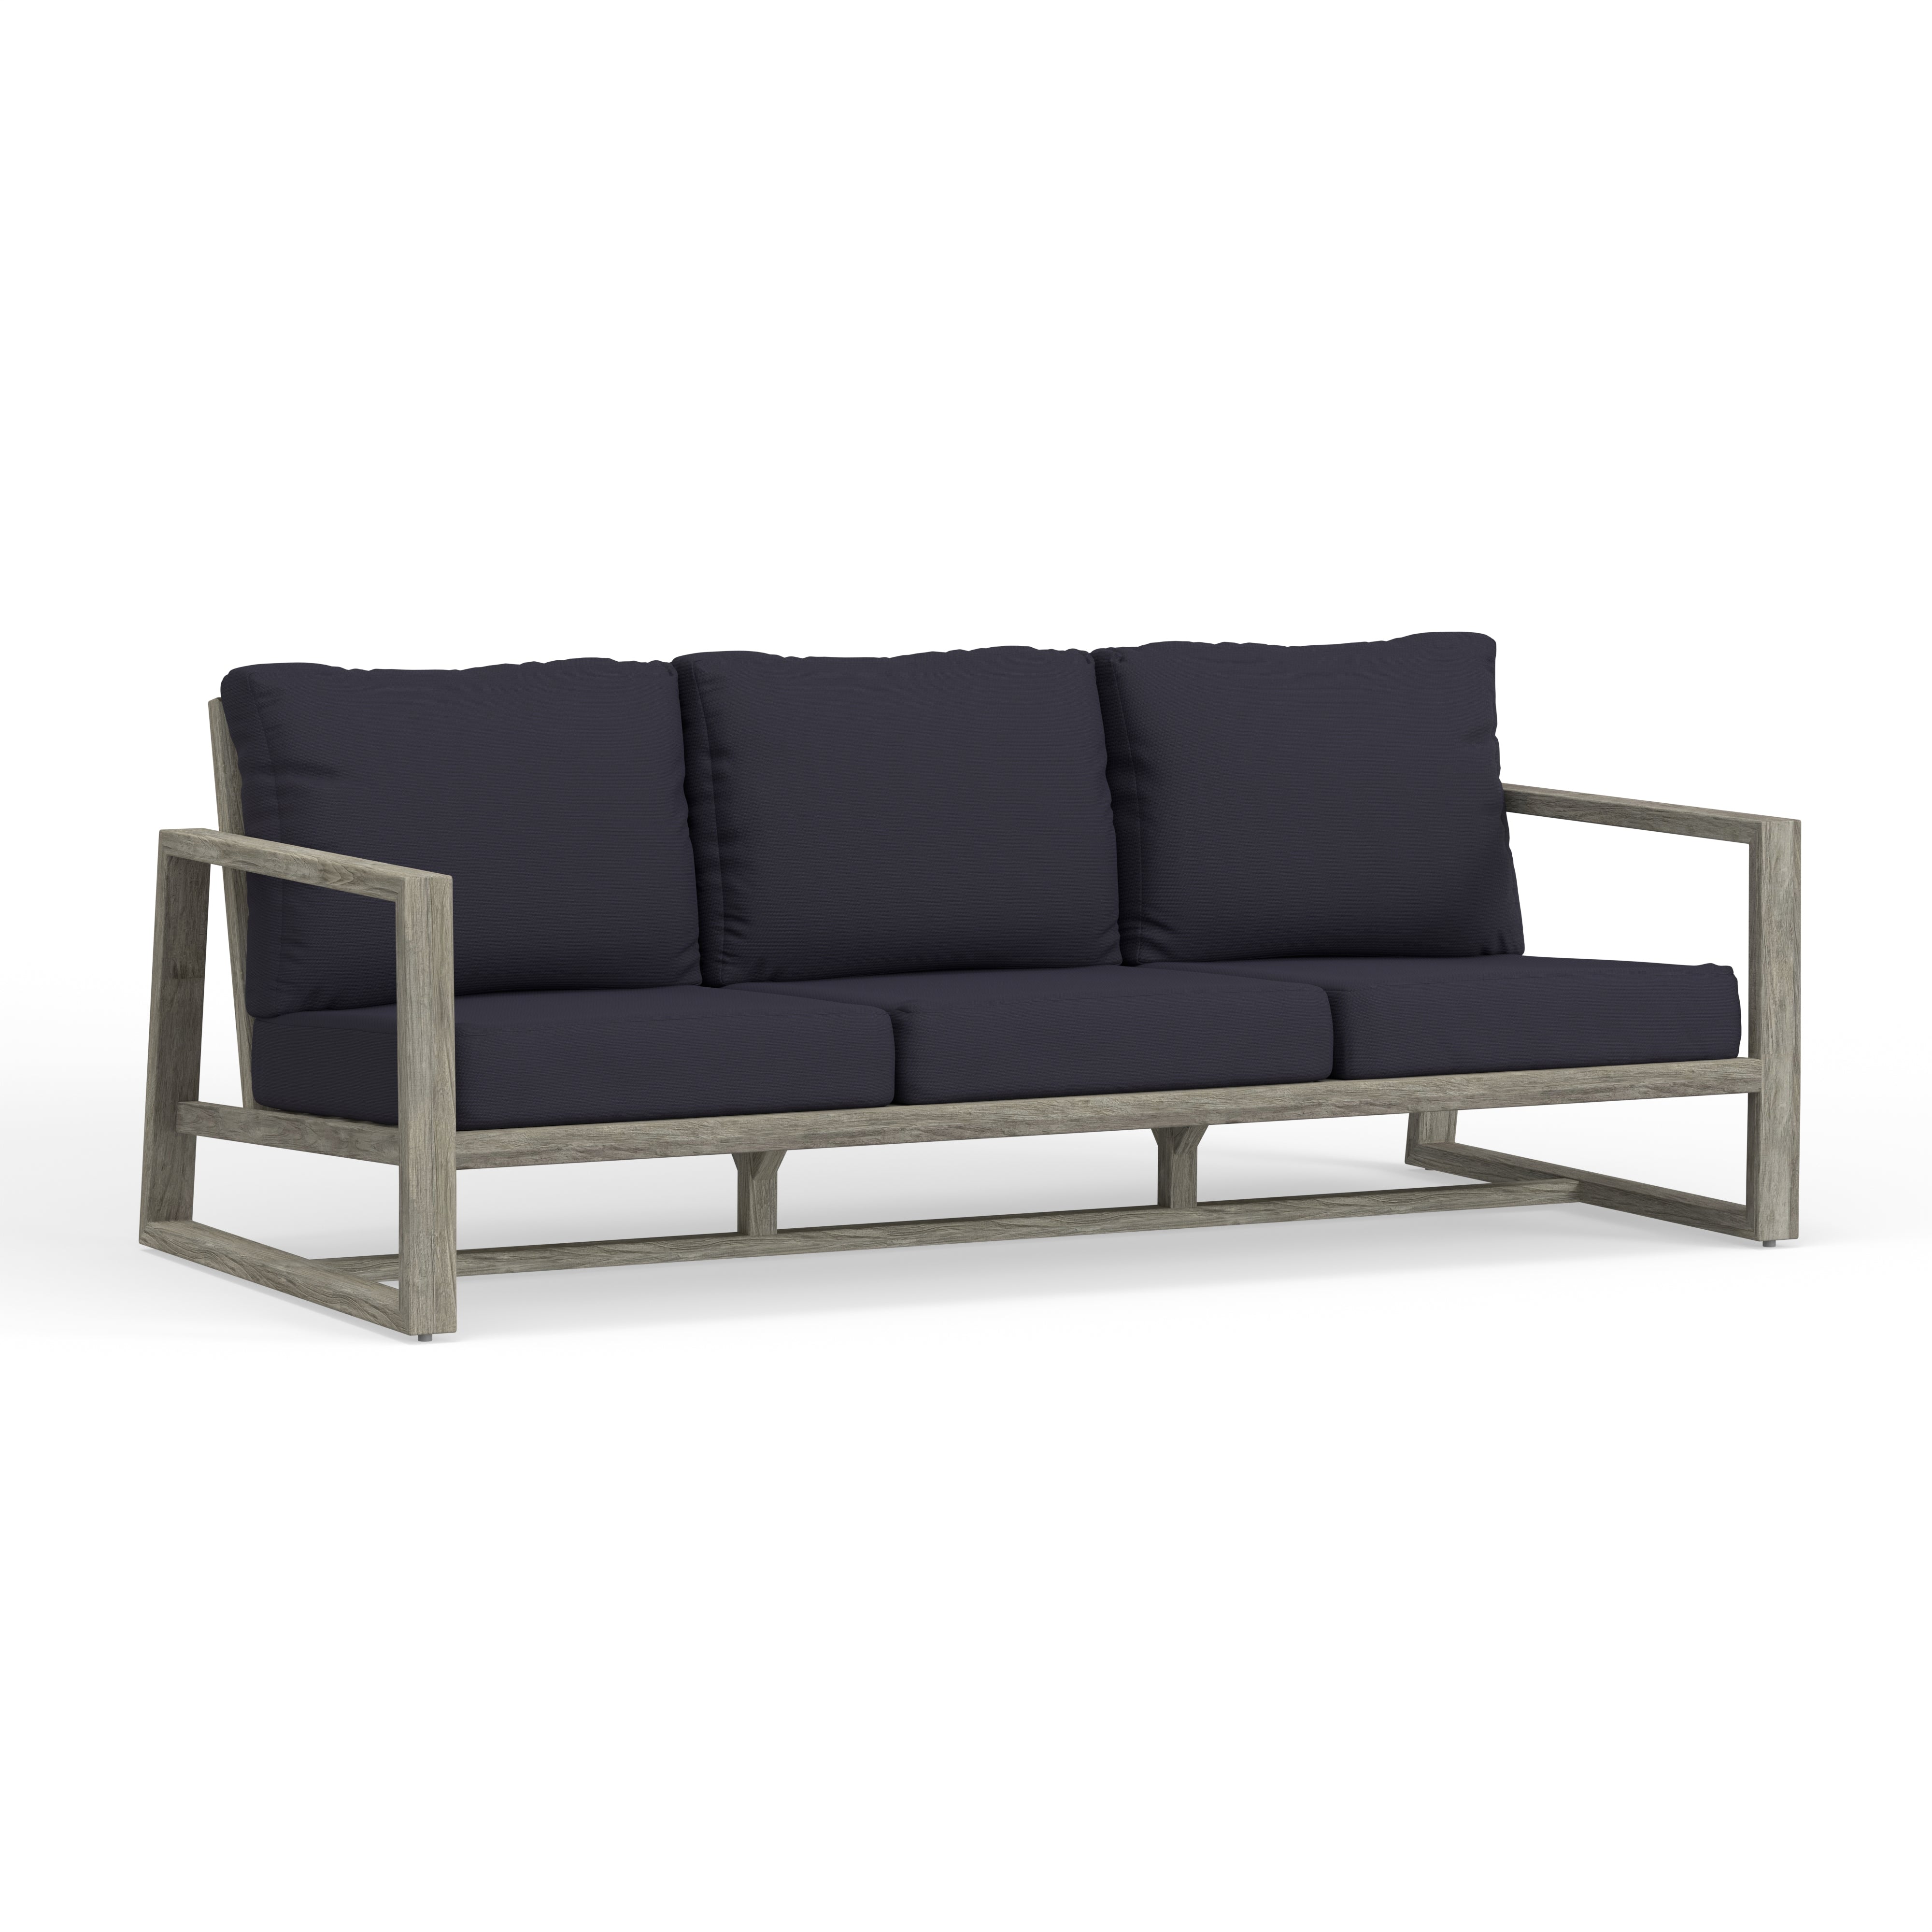 Most Comfortable Modern Sofa